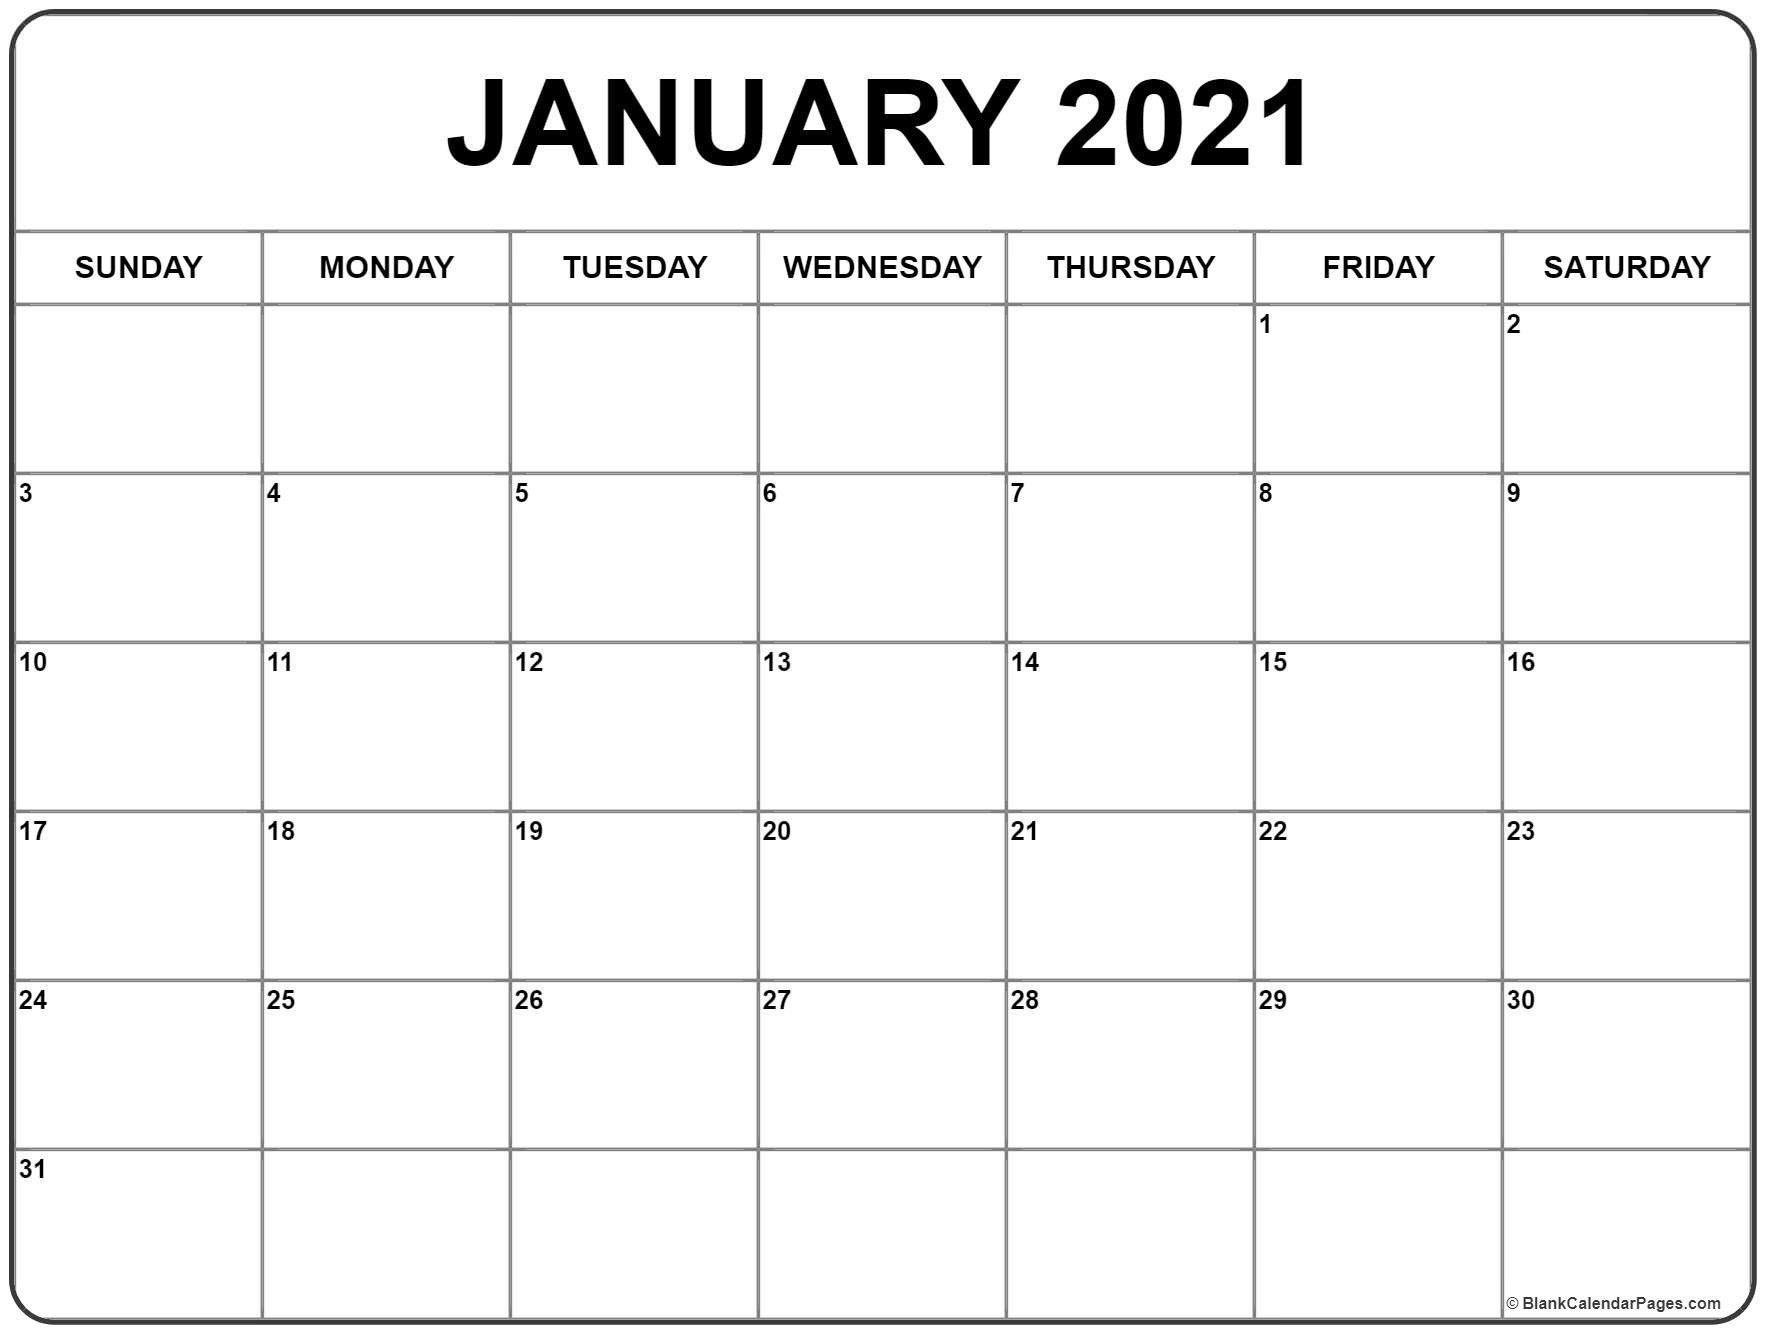 january 2021 calendar printable in 2020 | august calendar